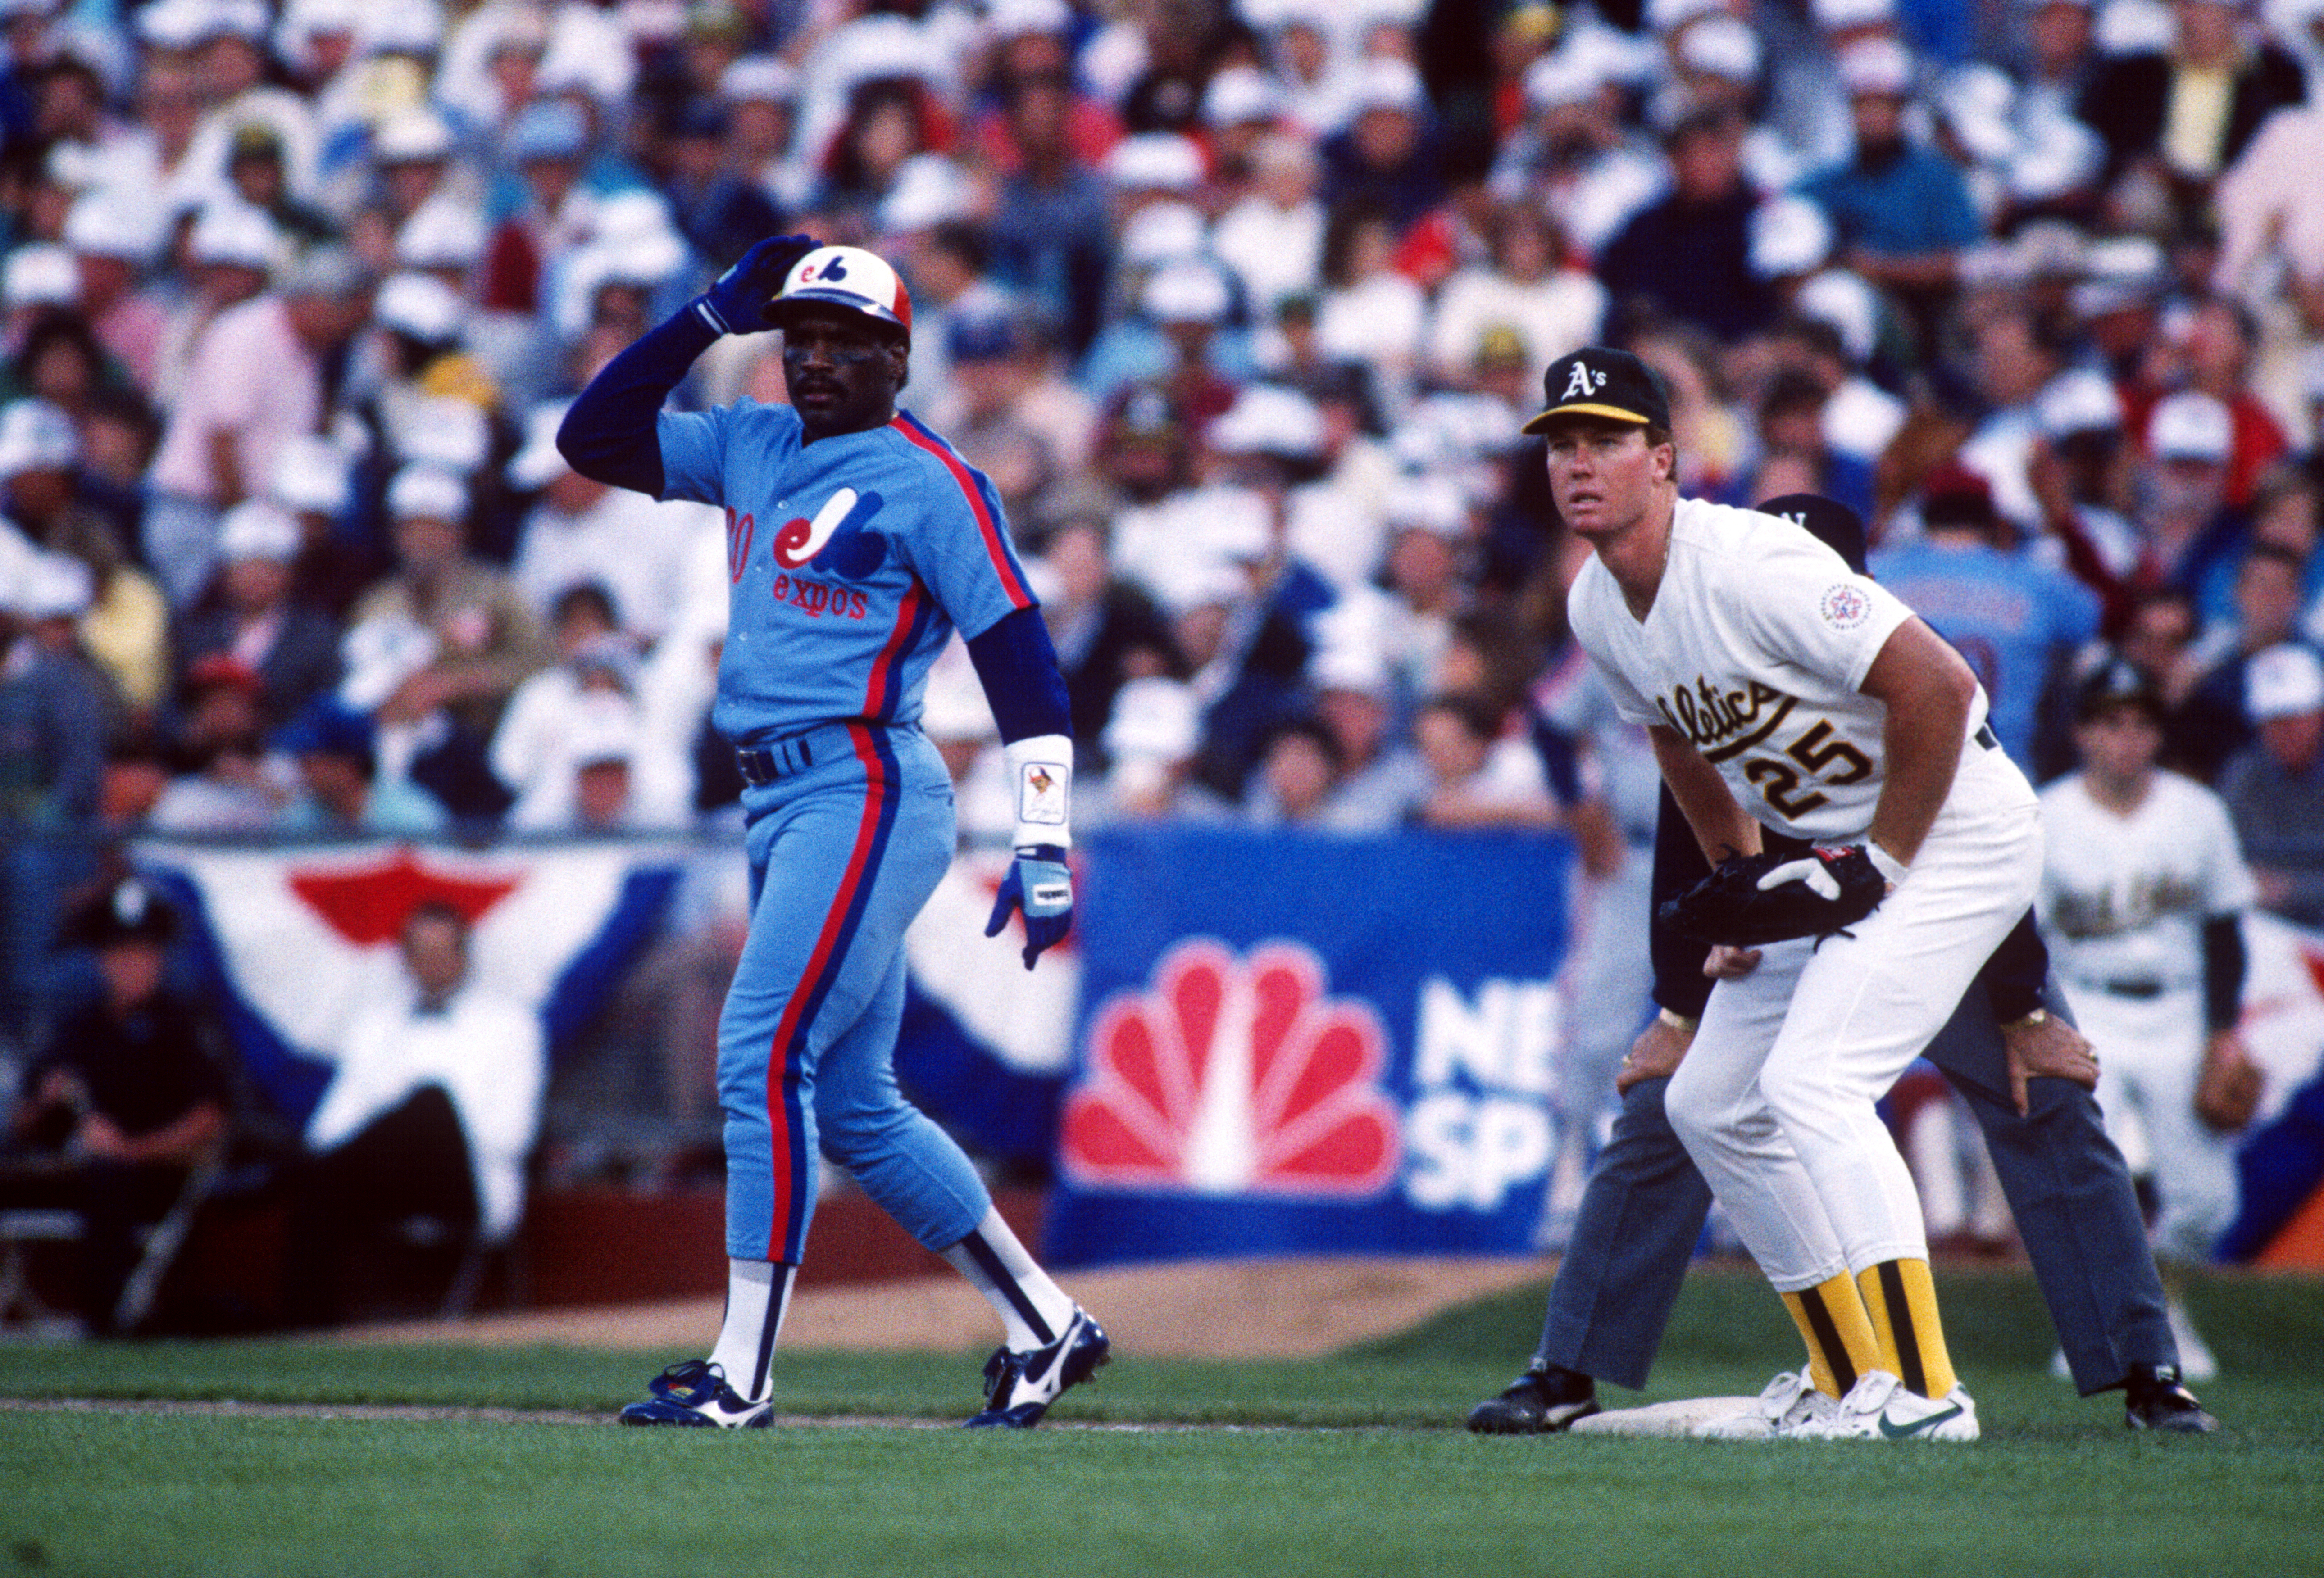 1987 Major League Baseball All-Star Game